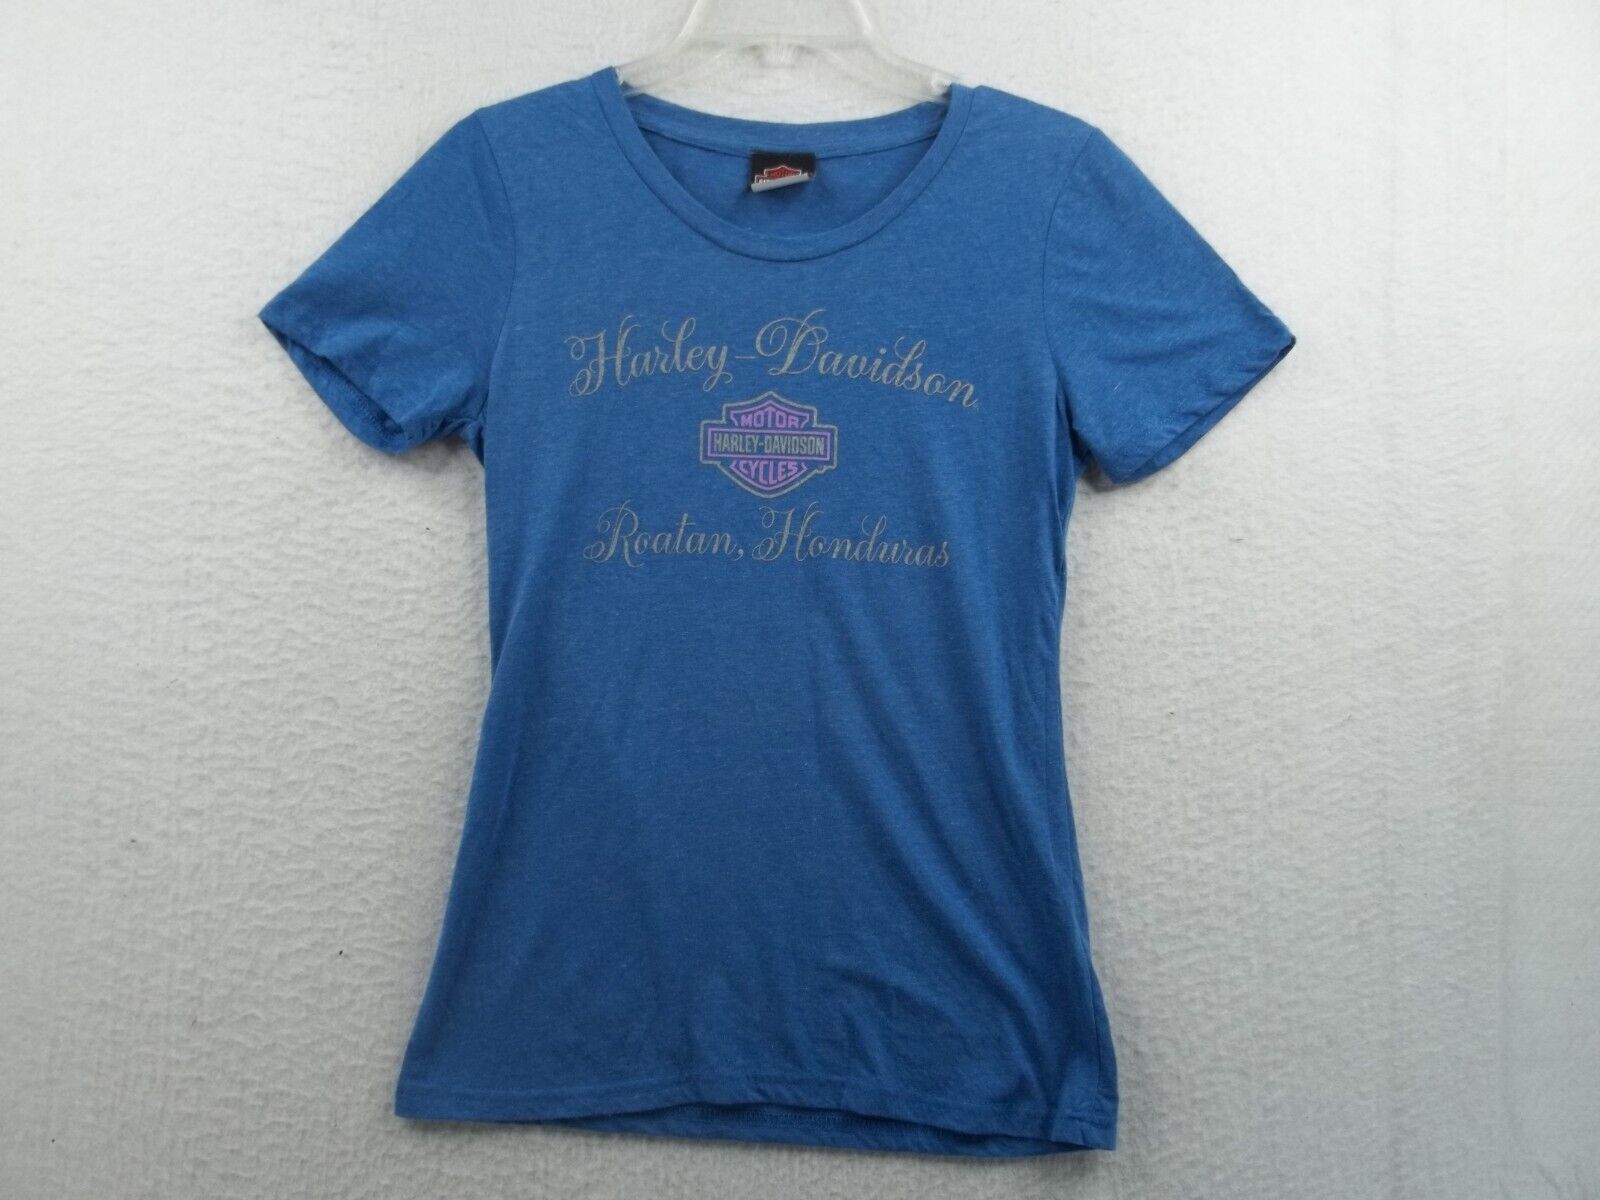 Harley Davidson Roatan Honduras Womens Blue Embellished Angel Wings T Shirt Sz M